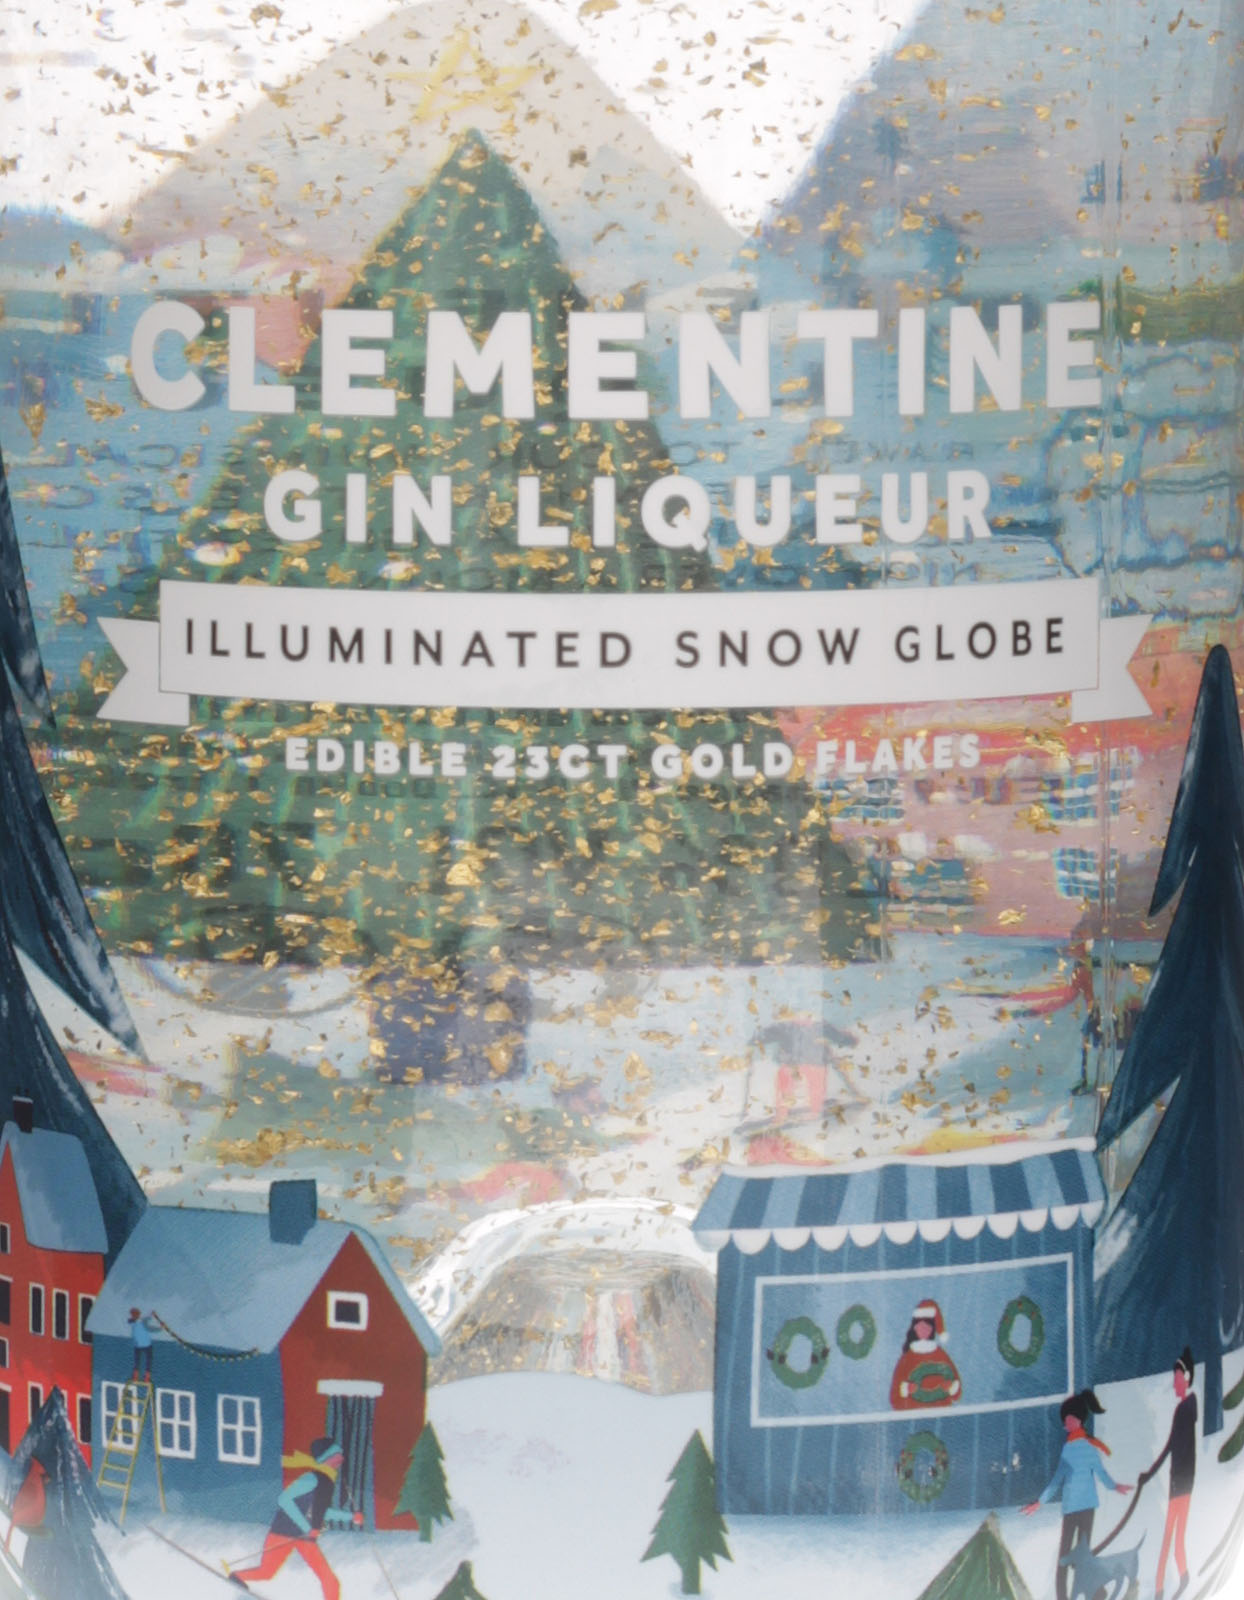 Hohe Qualität Clementine Gin Liqueur im k Globe Shop Snow Illuminated